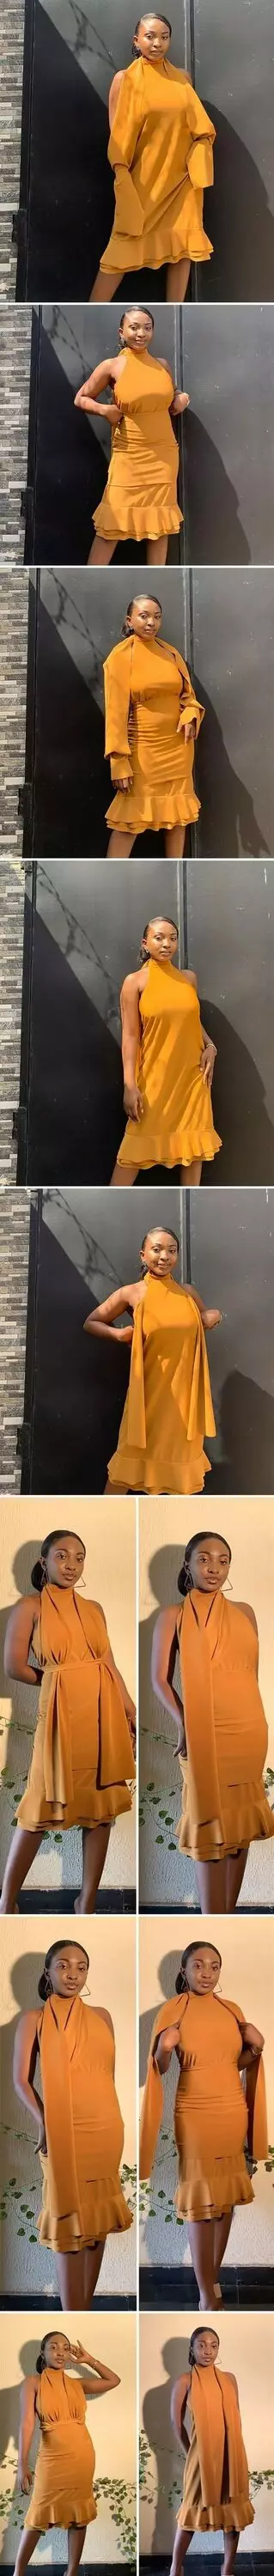 Ingenious transformer dresses from Oyinda Akinfenva